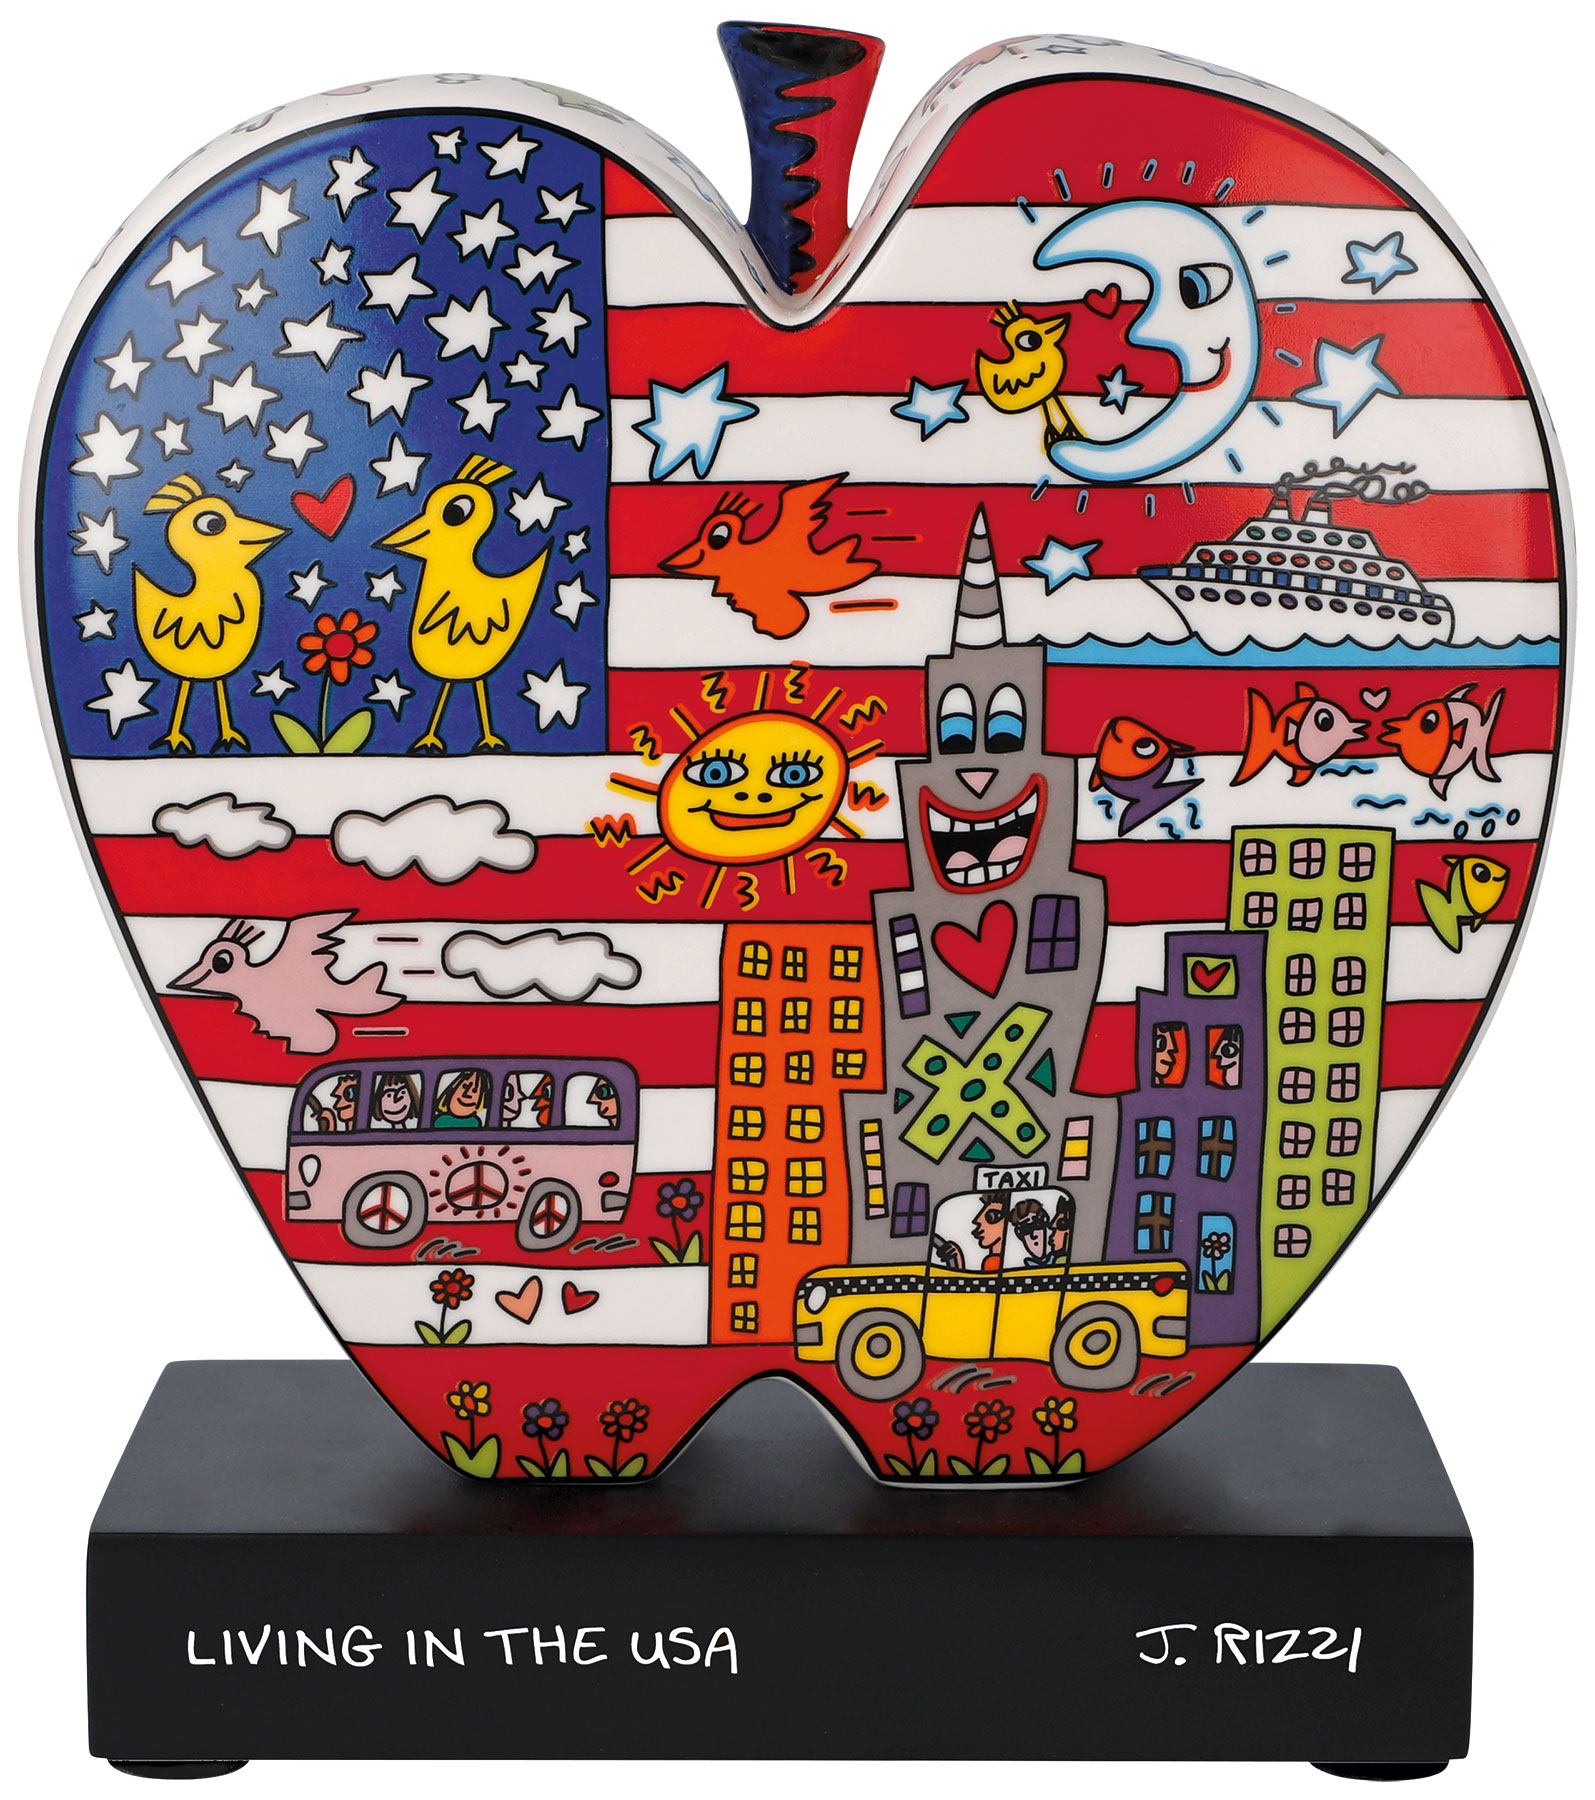 Porzellanobjekt "Living in the USA" von James Rizzi